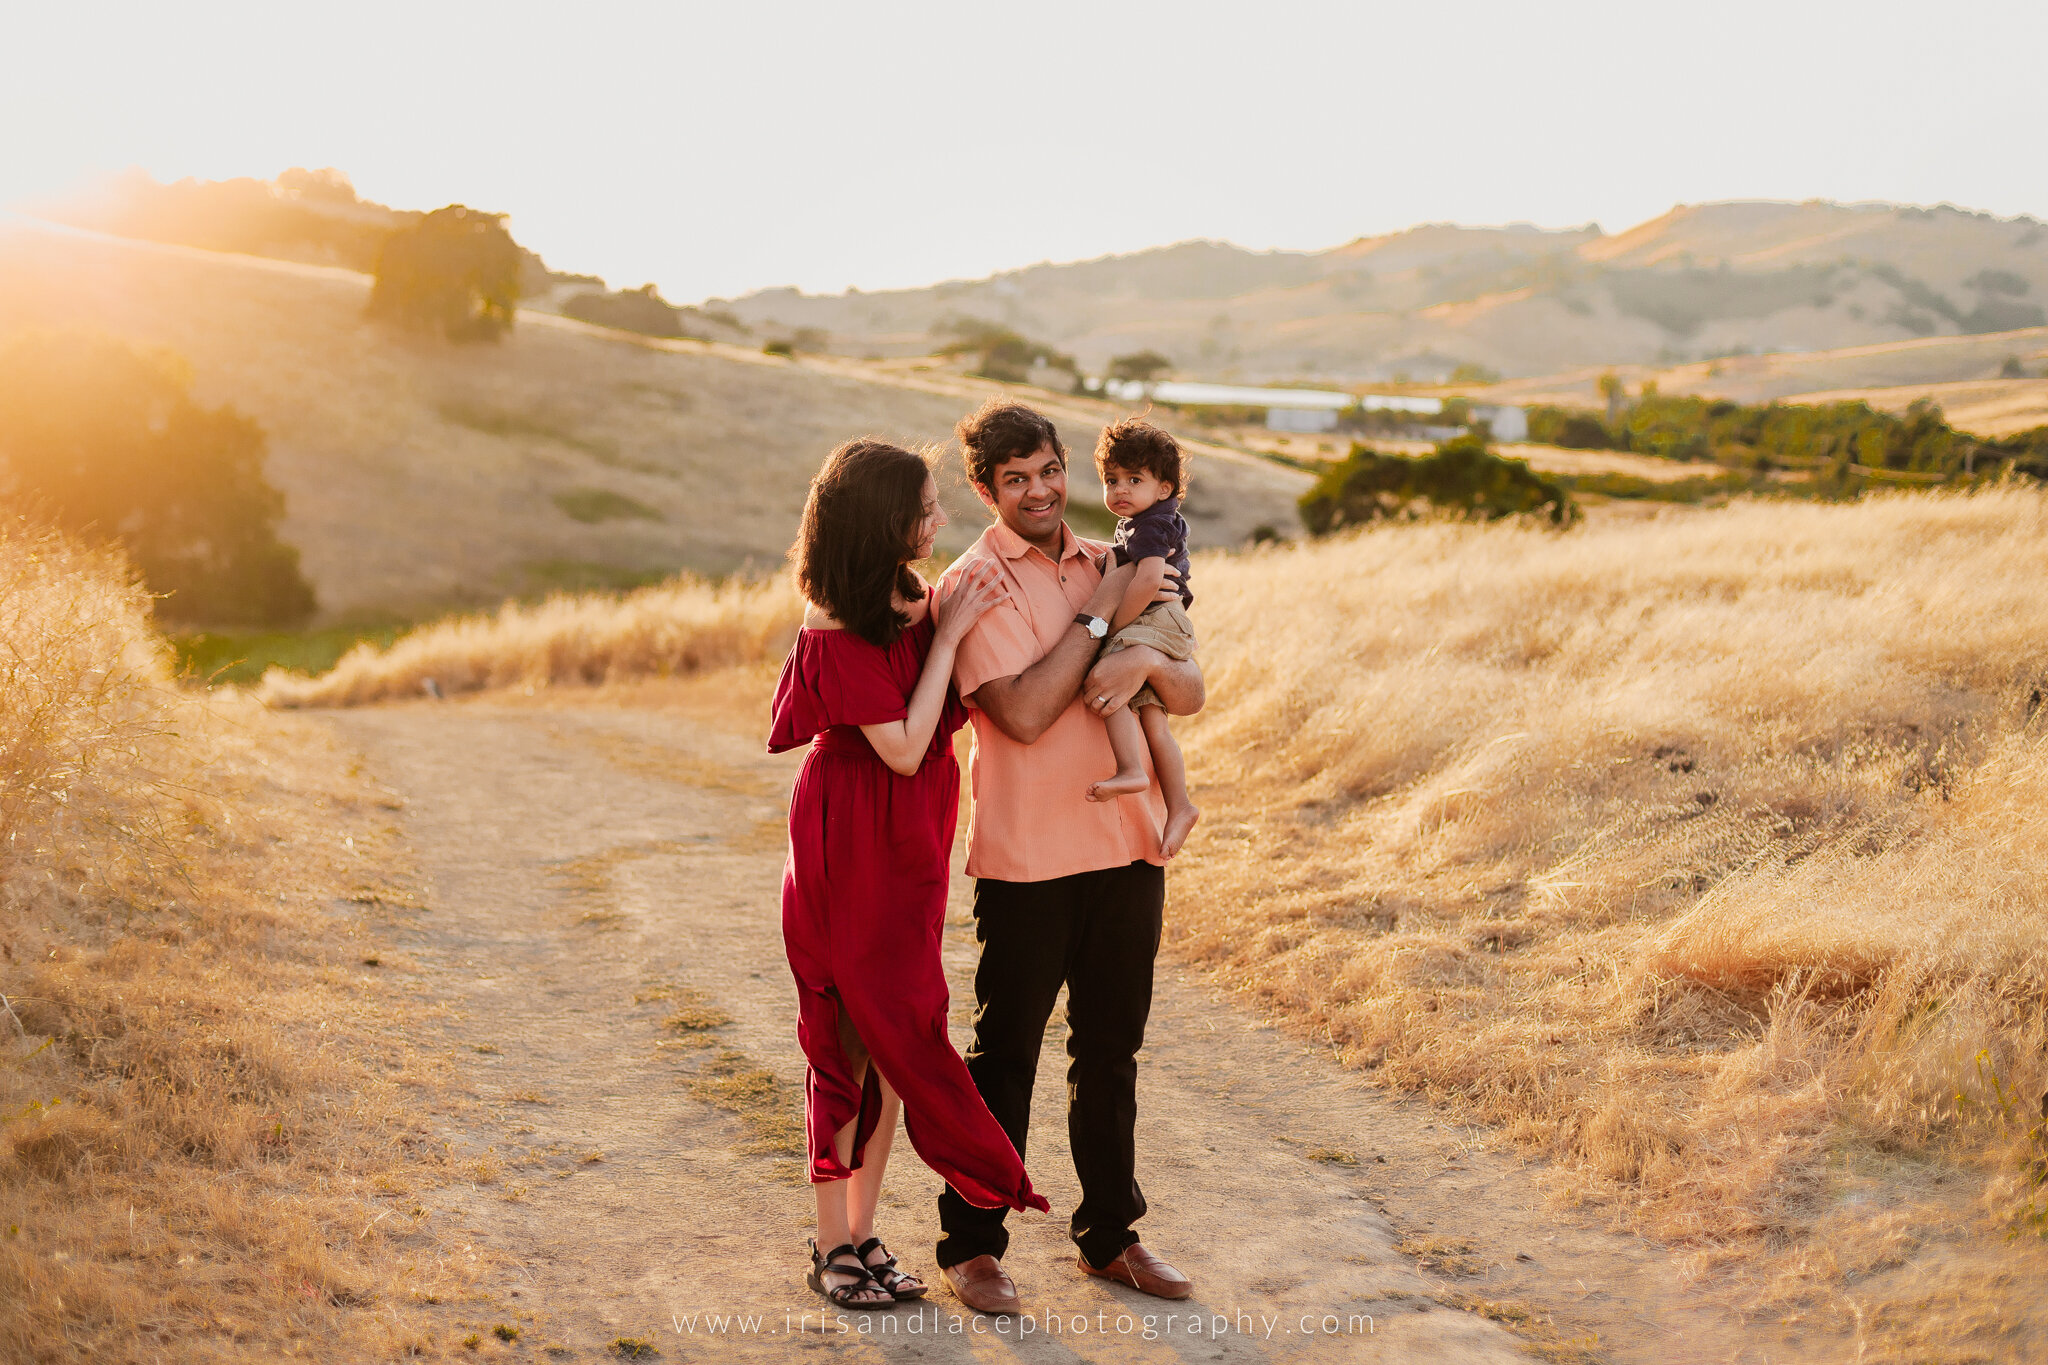 Family Photos near San Jose, CA  |  Iris and Lace Photography